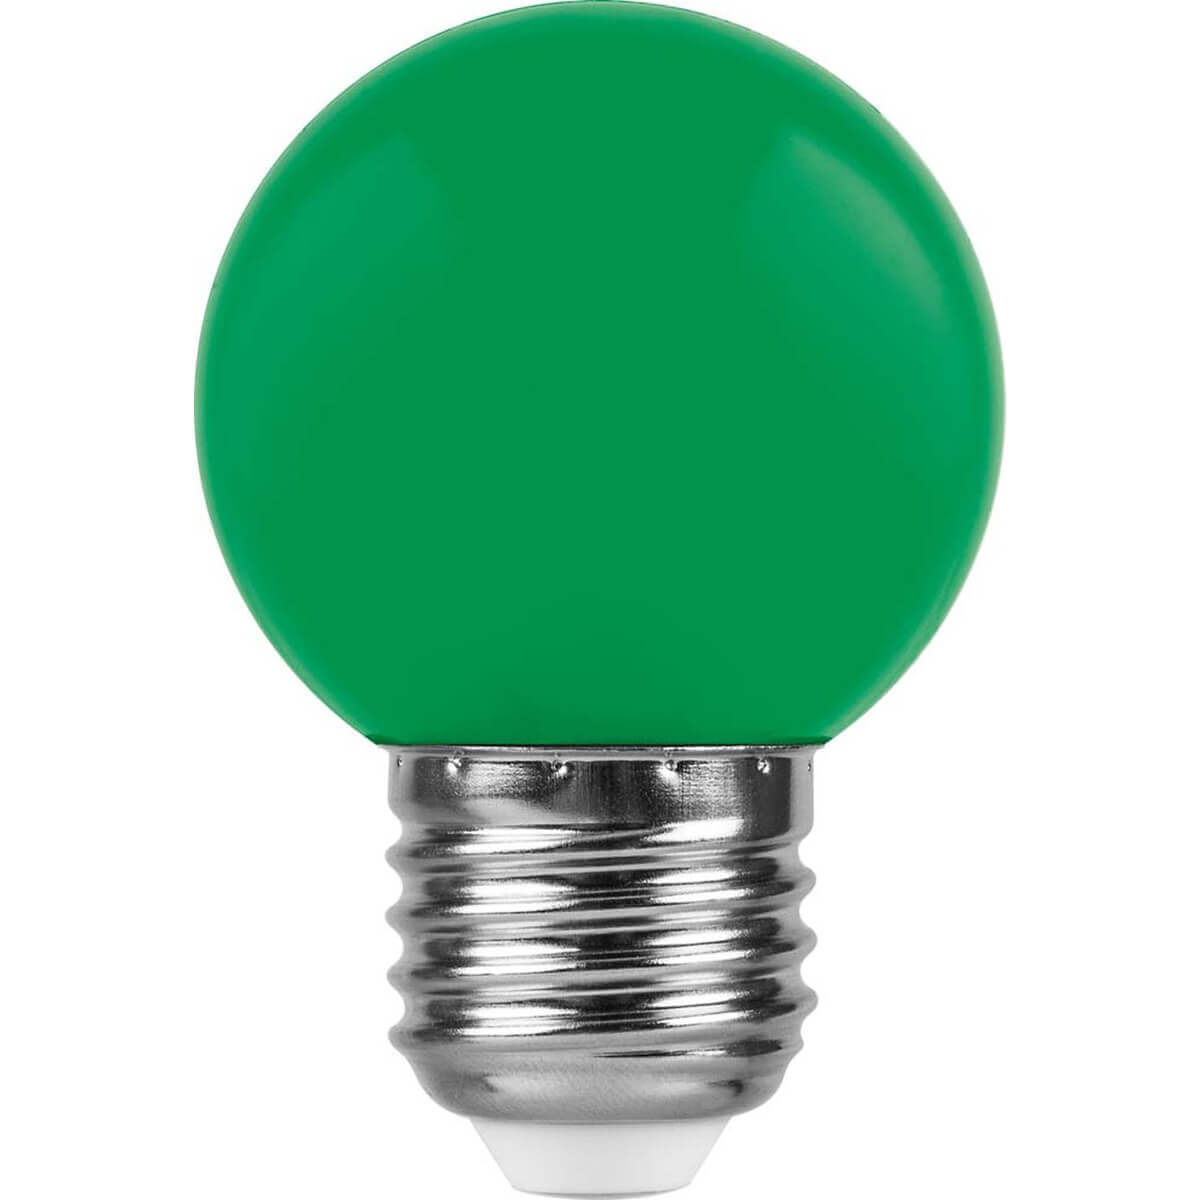 Лампа светодиодная Feron E27 1W Зеленый Шар Матовая LB-37 25117